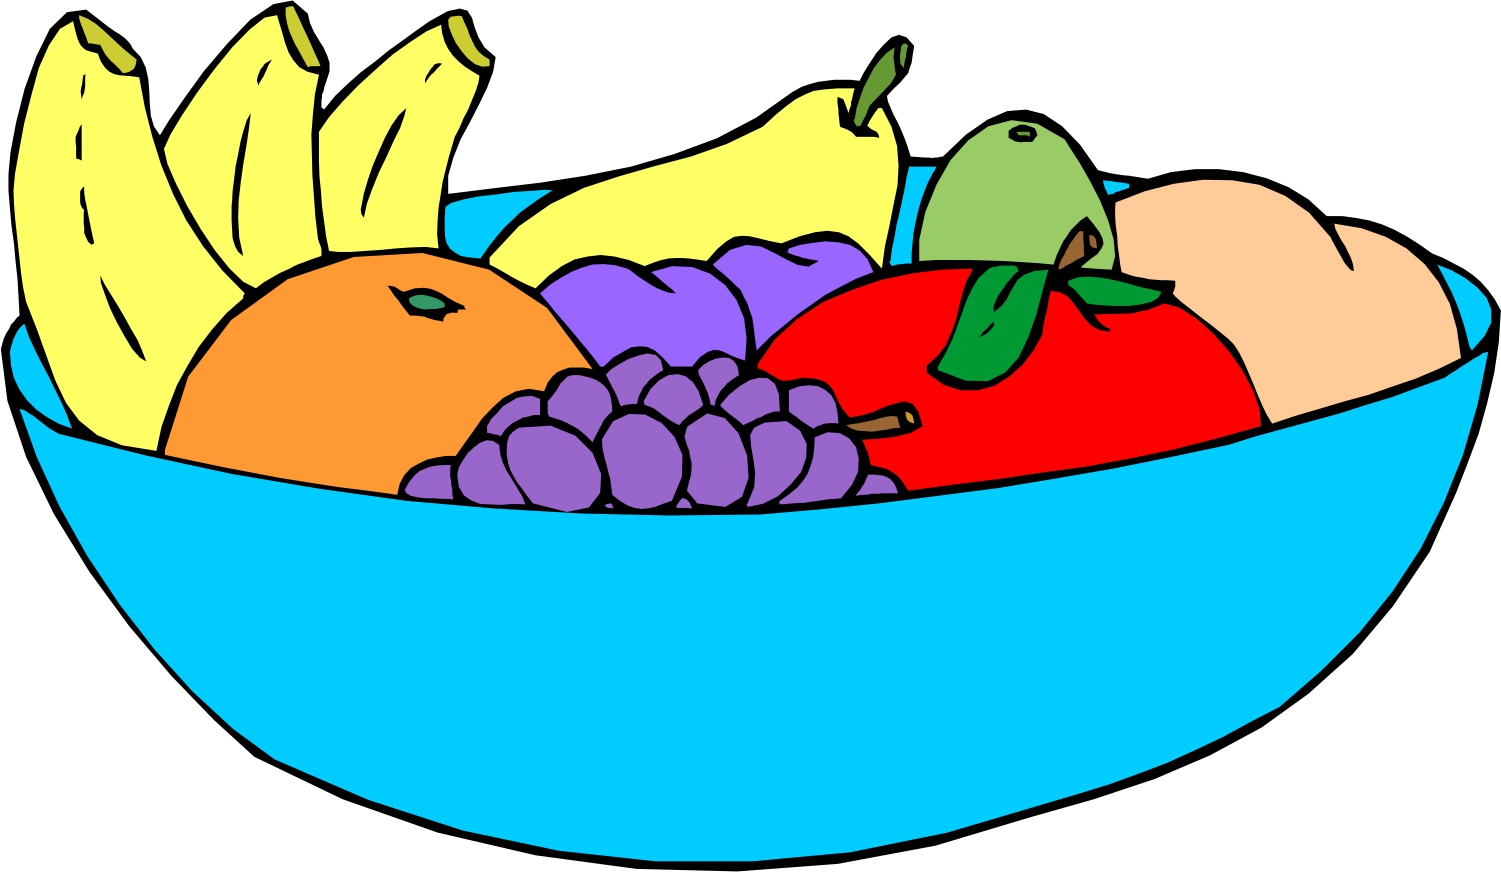 Fruits clip art - Cliparting.com